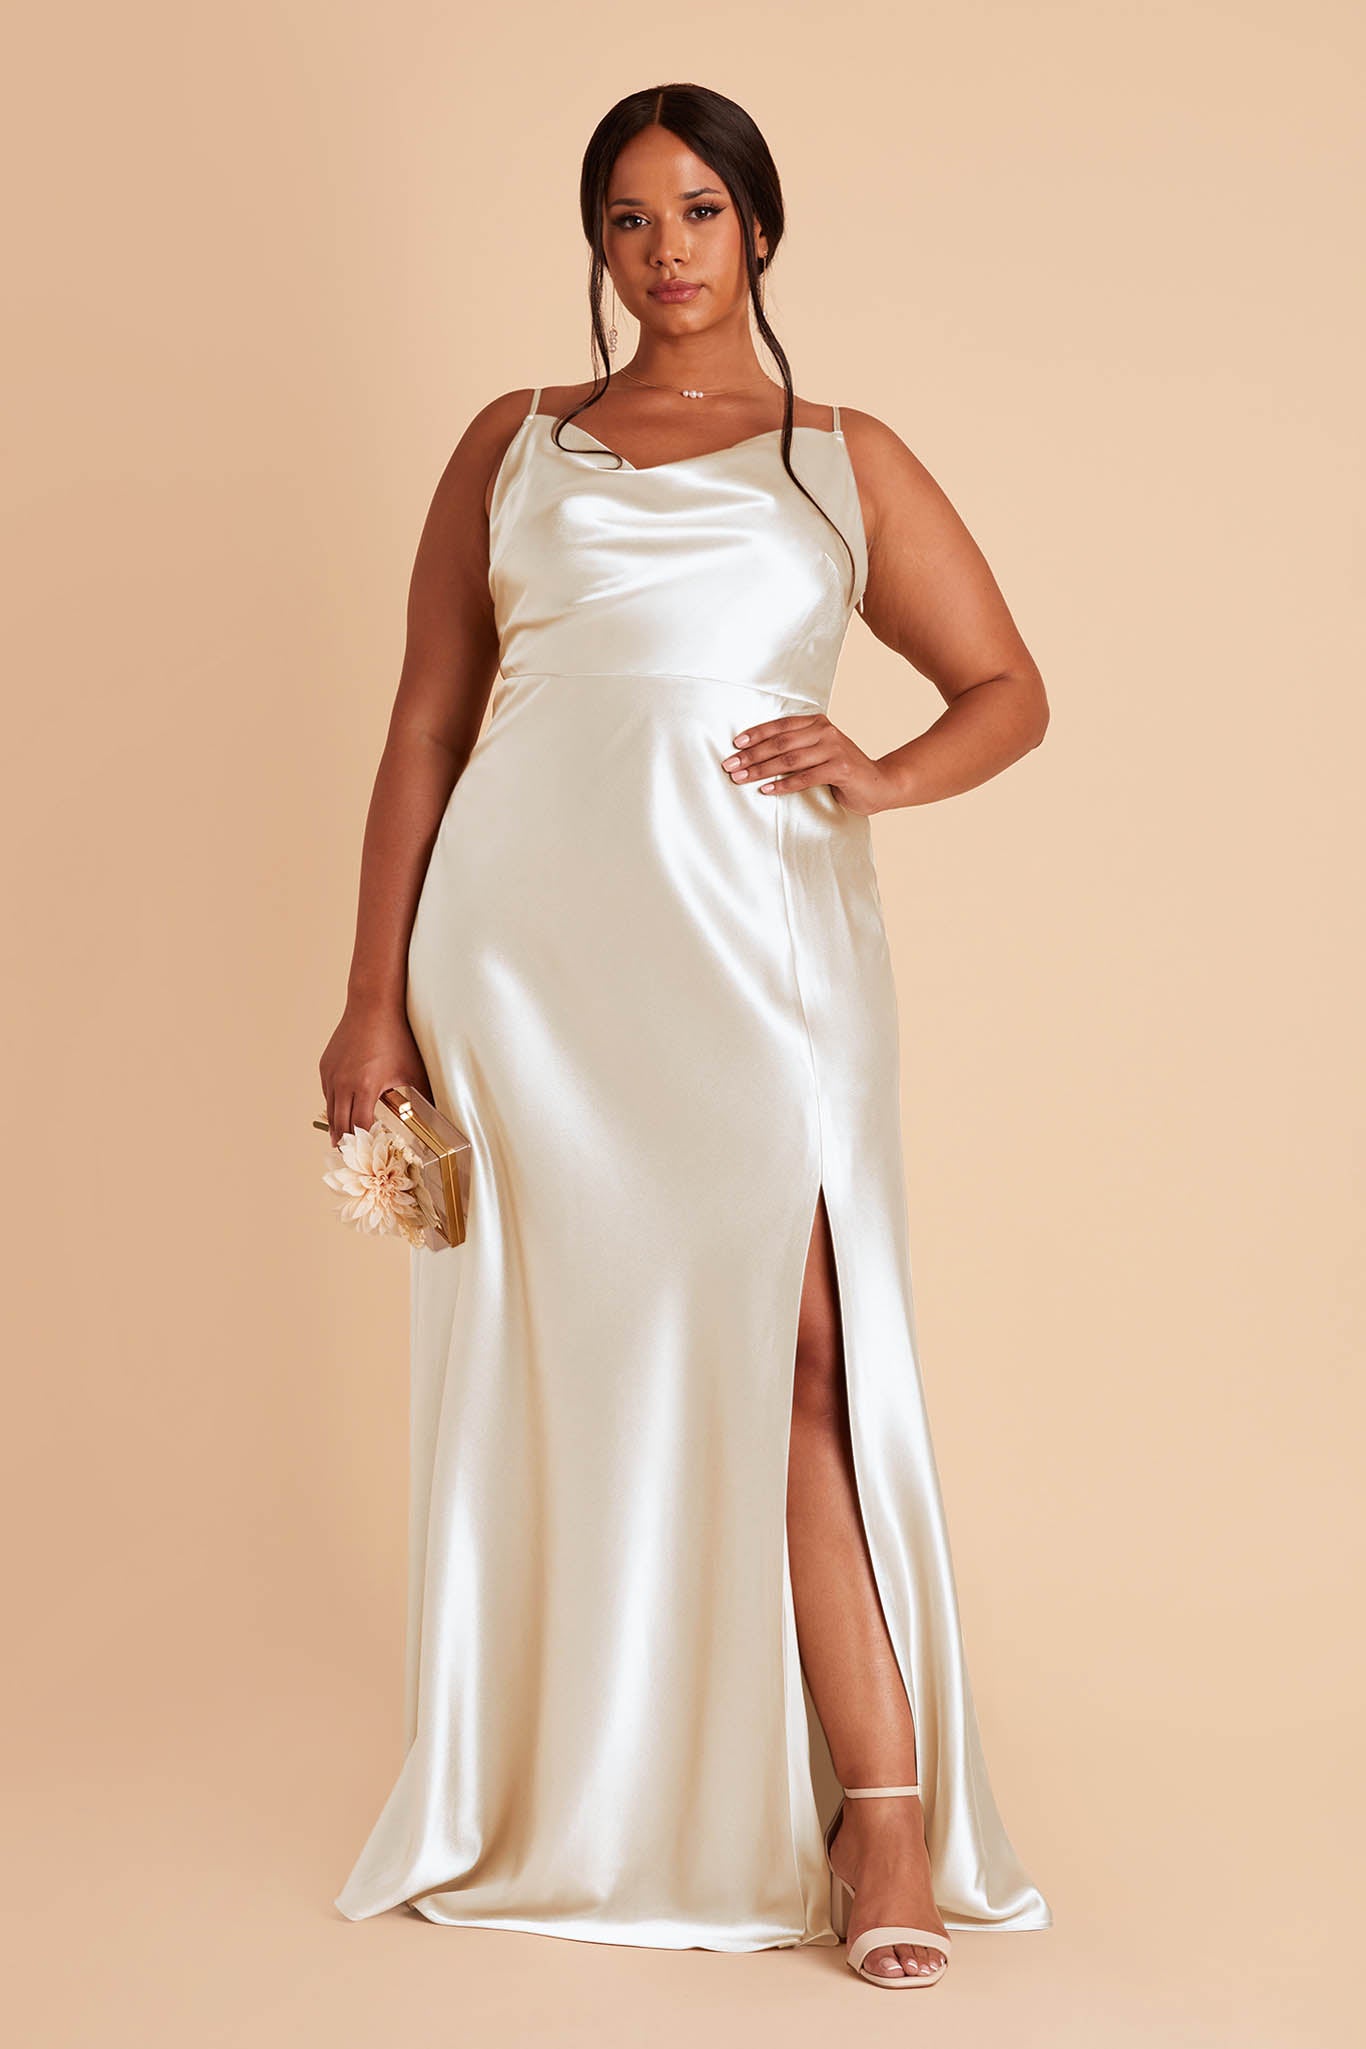 white dress for plus size